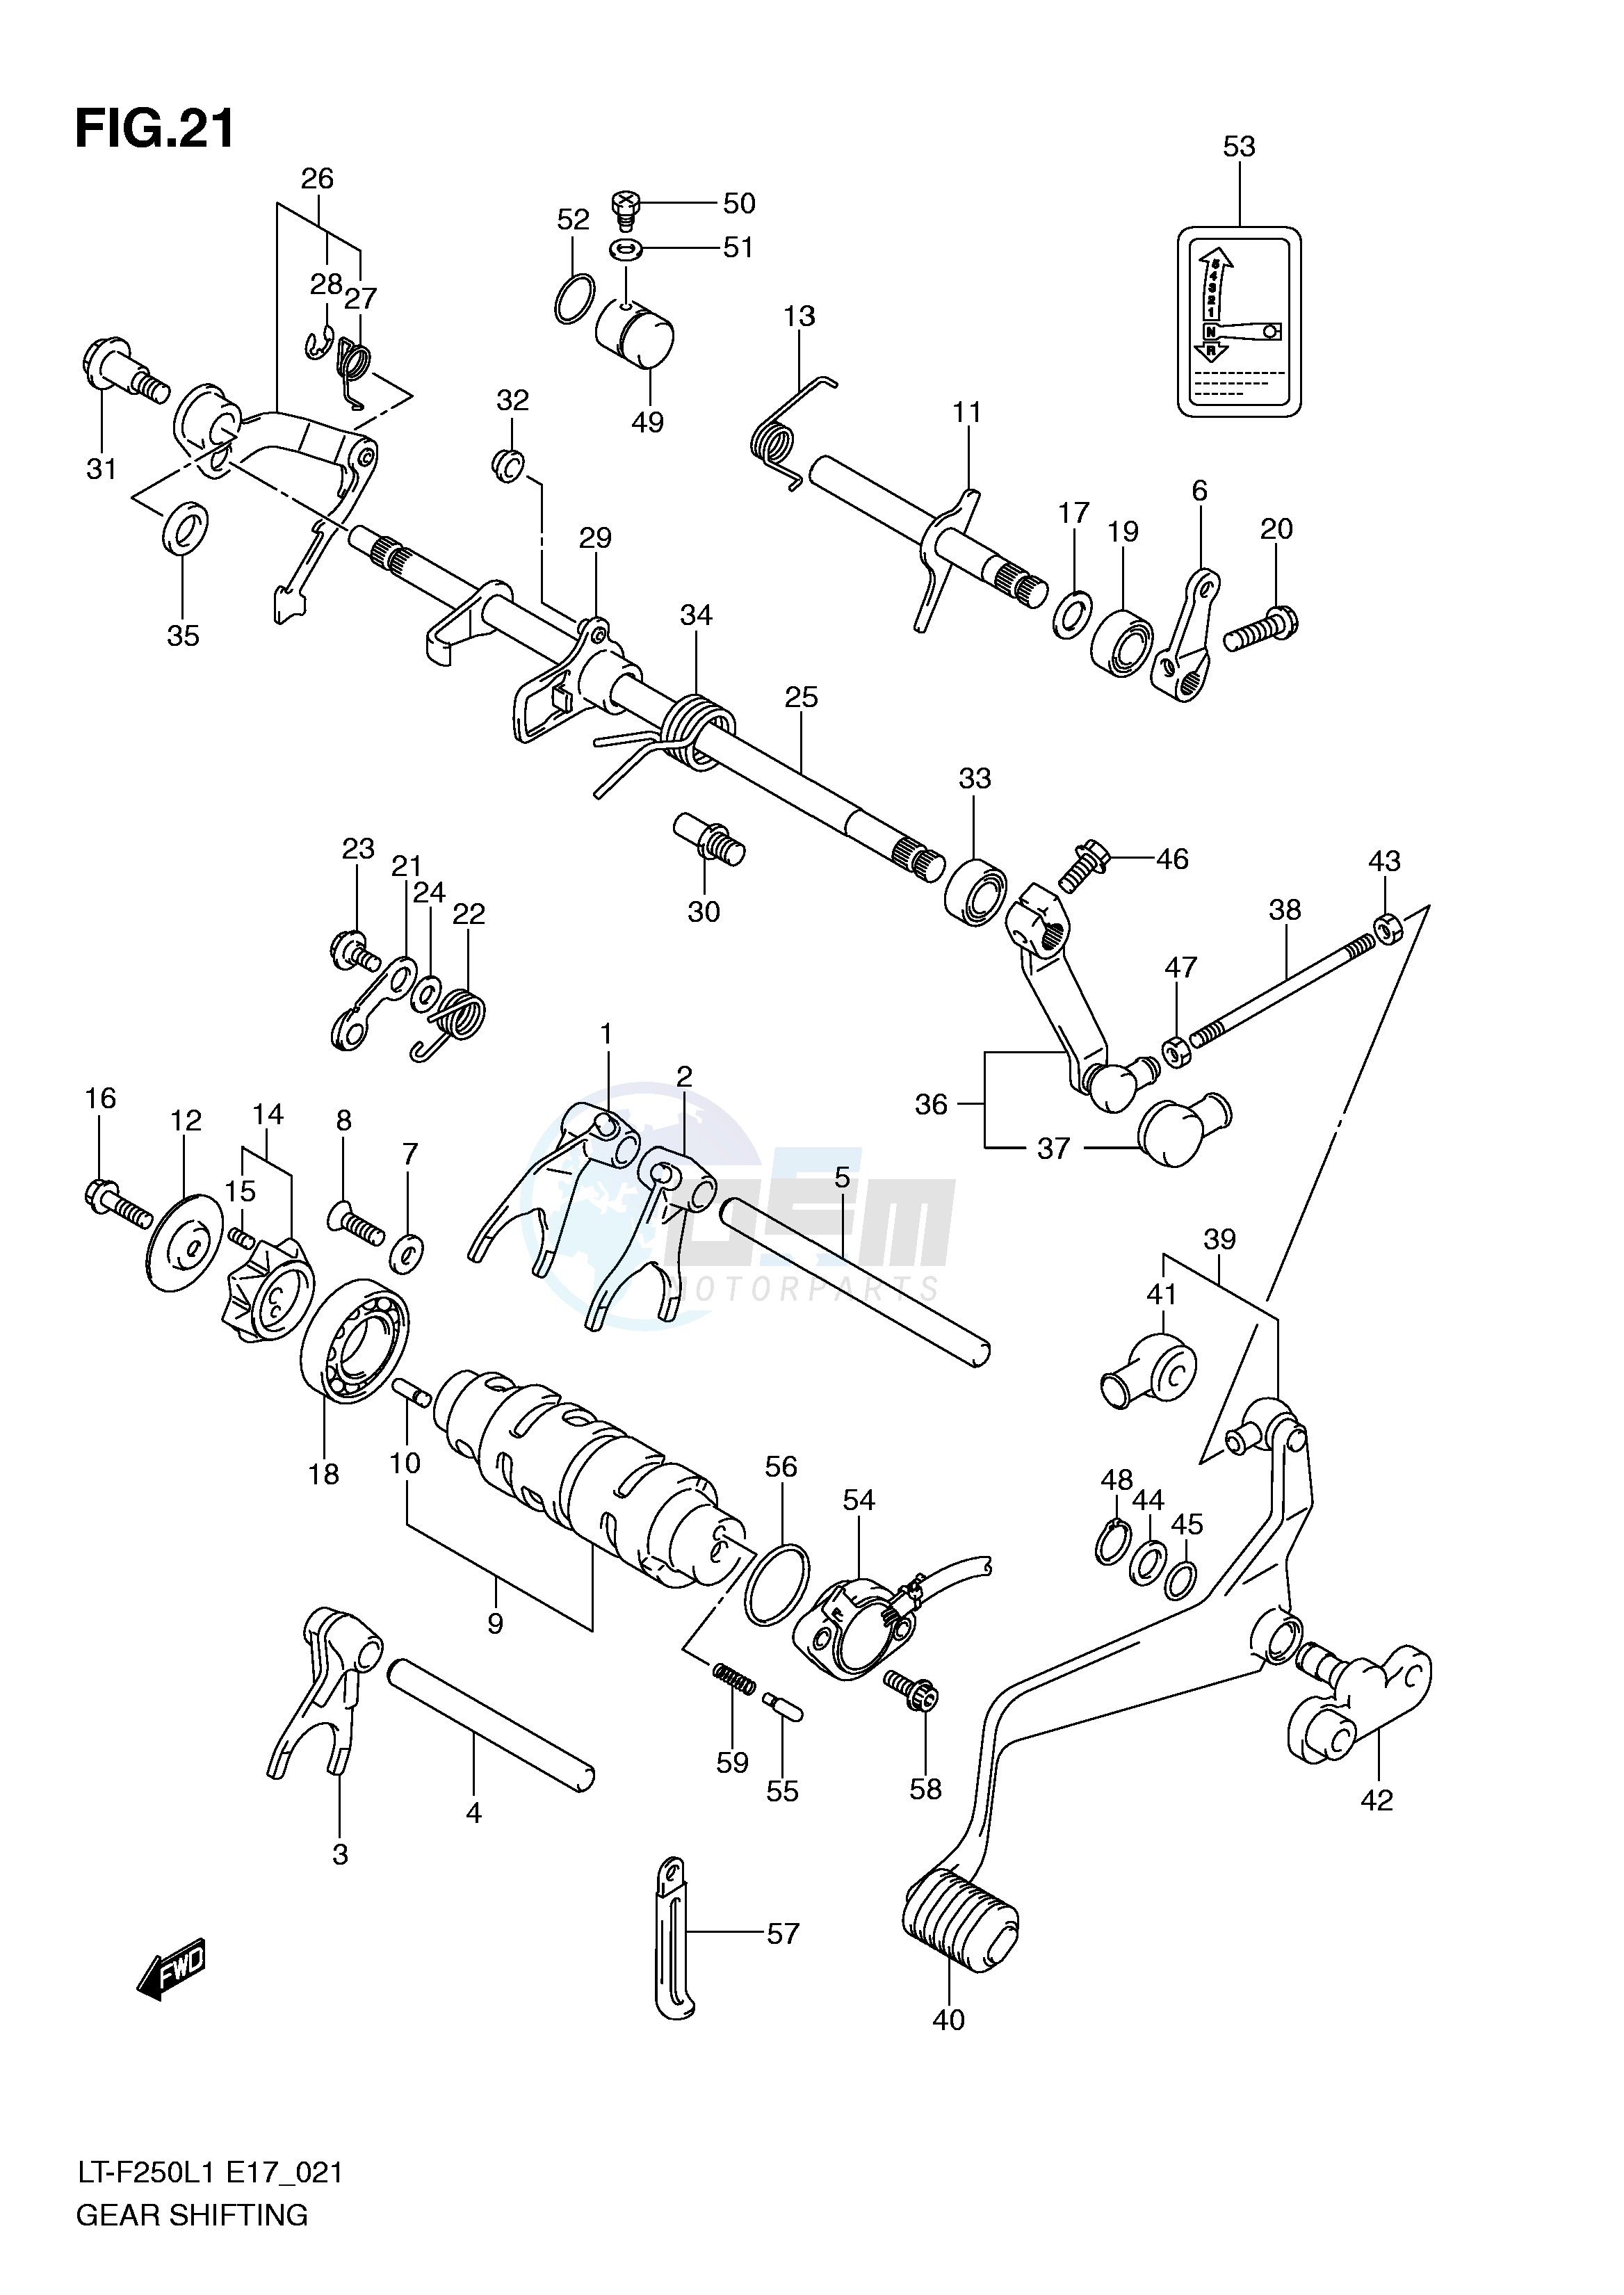 GEAR SHIFTING (LT-F250L1 E24) blueprint